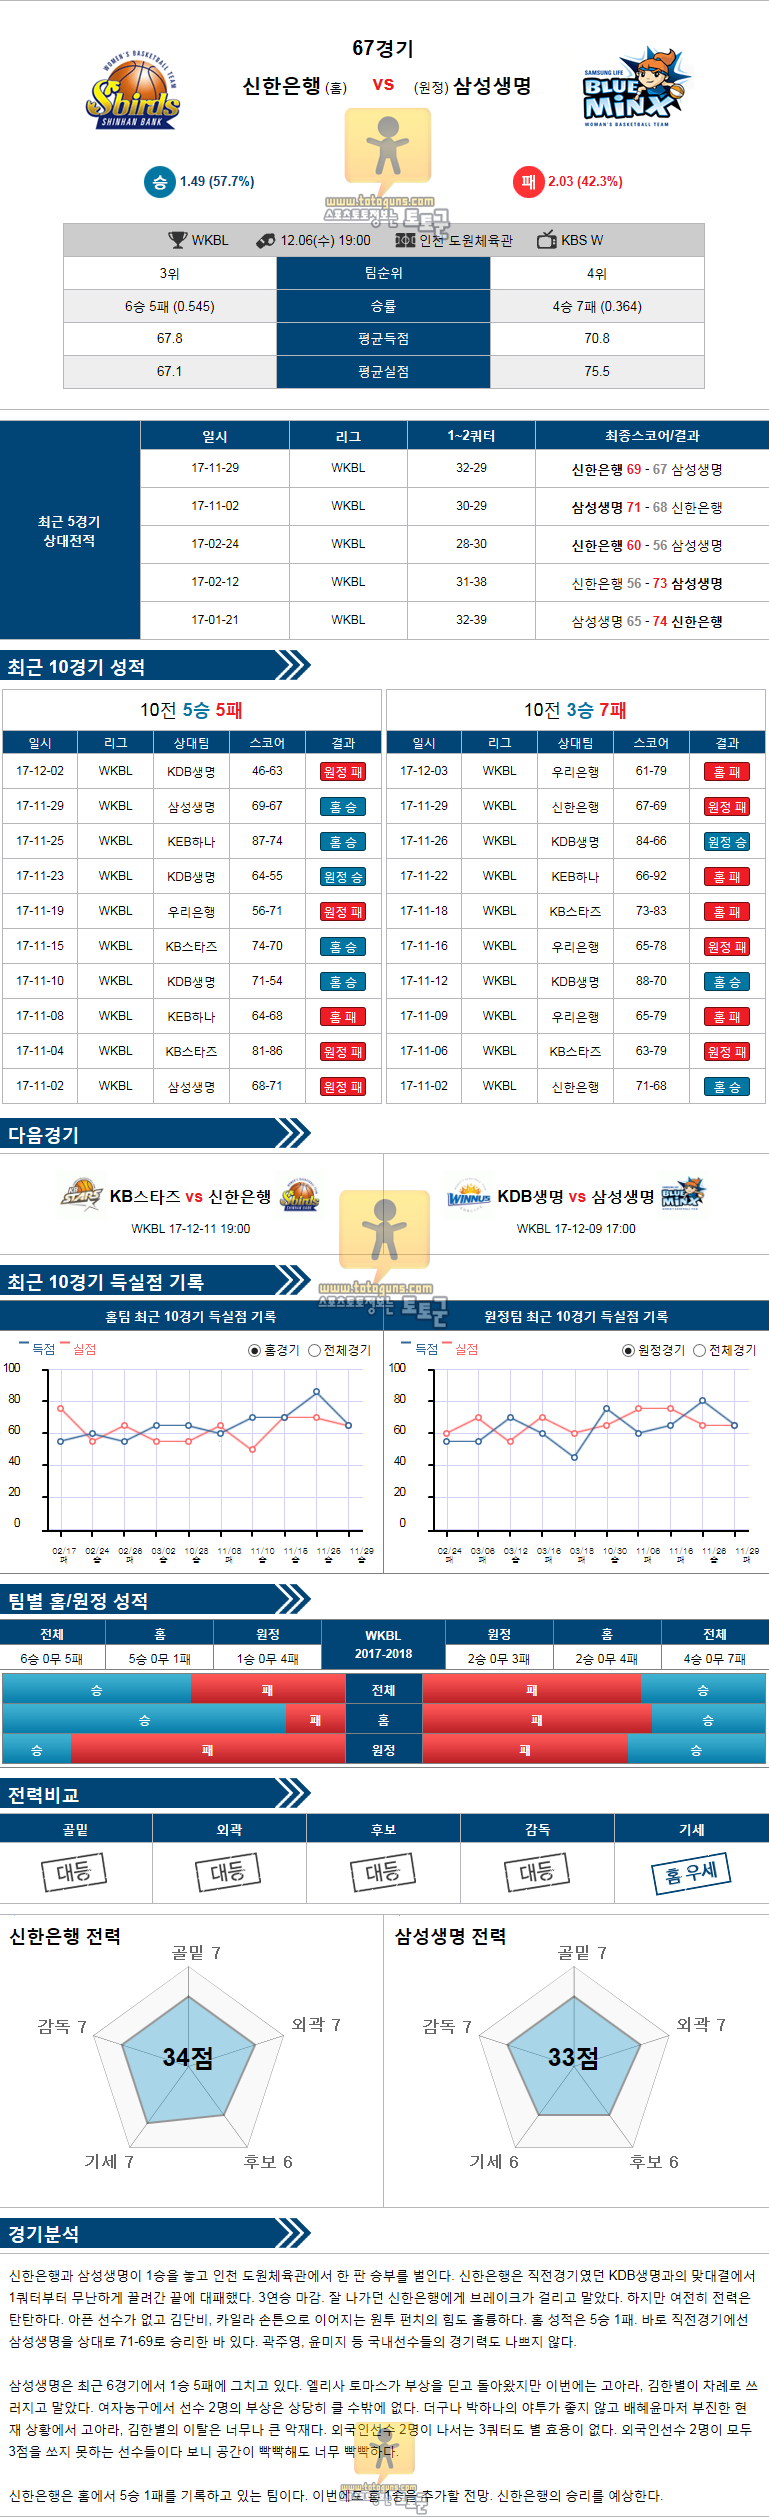 [WKBL] 12월 06일 19:00 여자농구분석 신한은행 vs 삼성생명